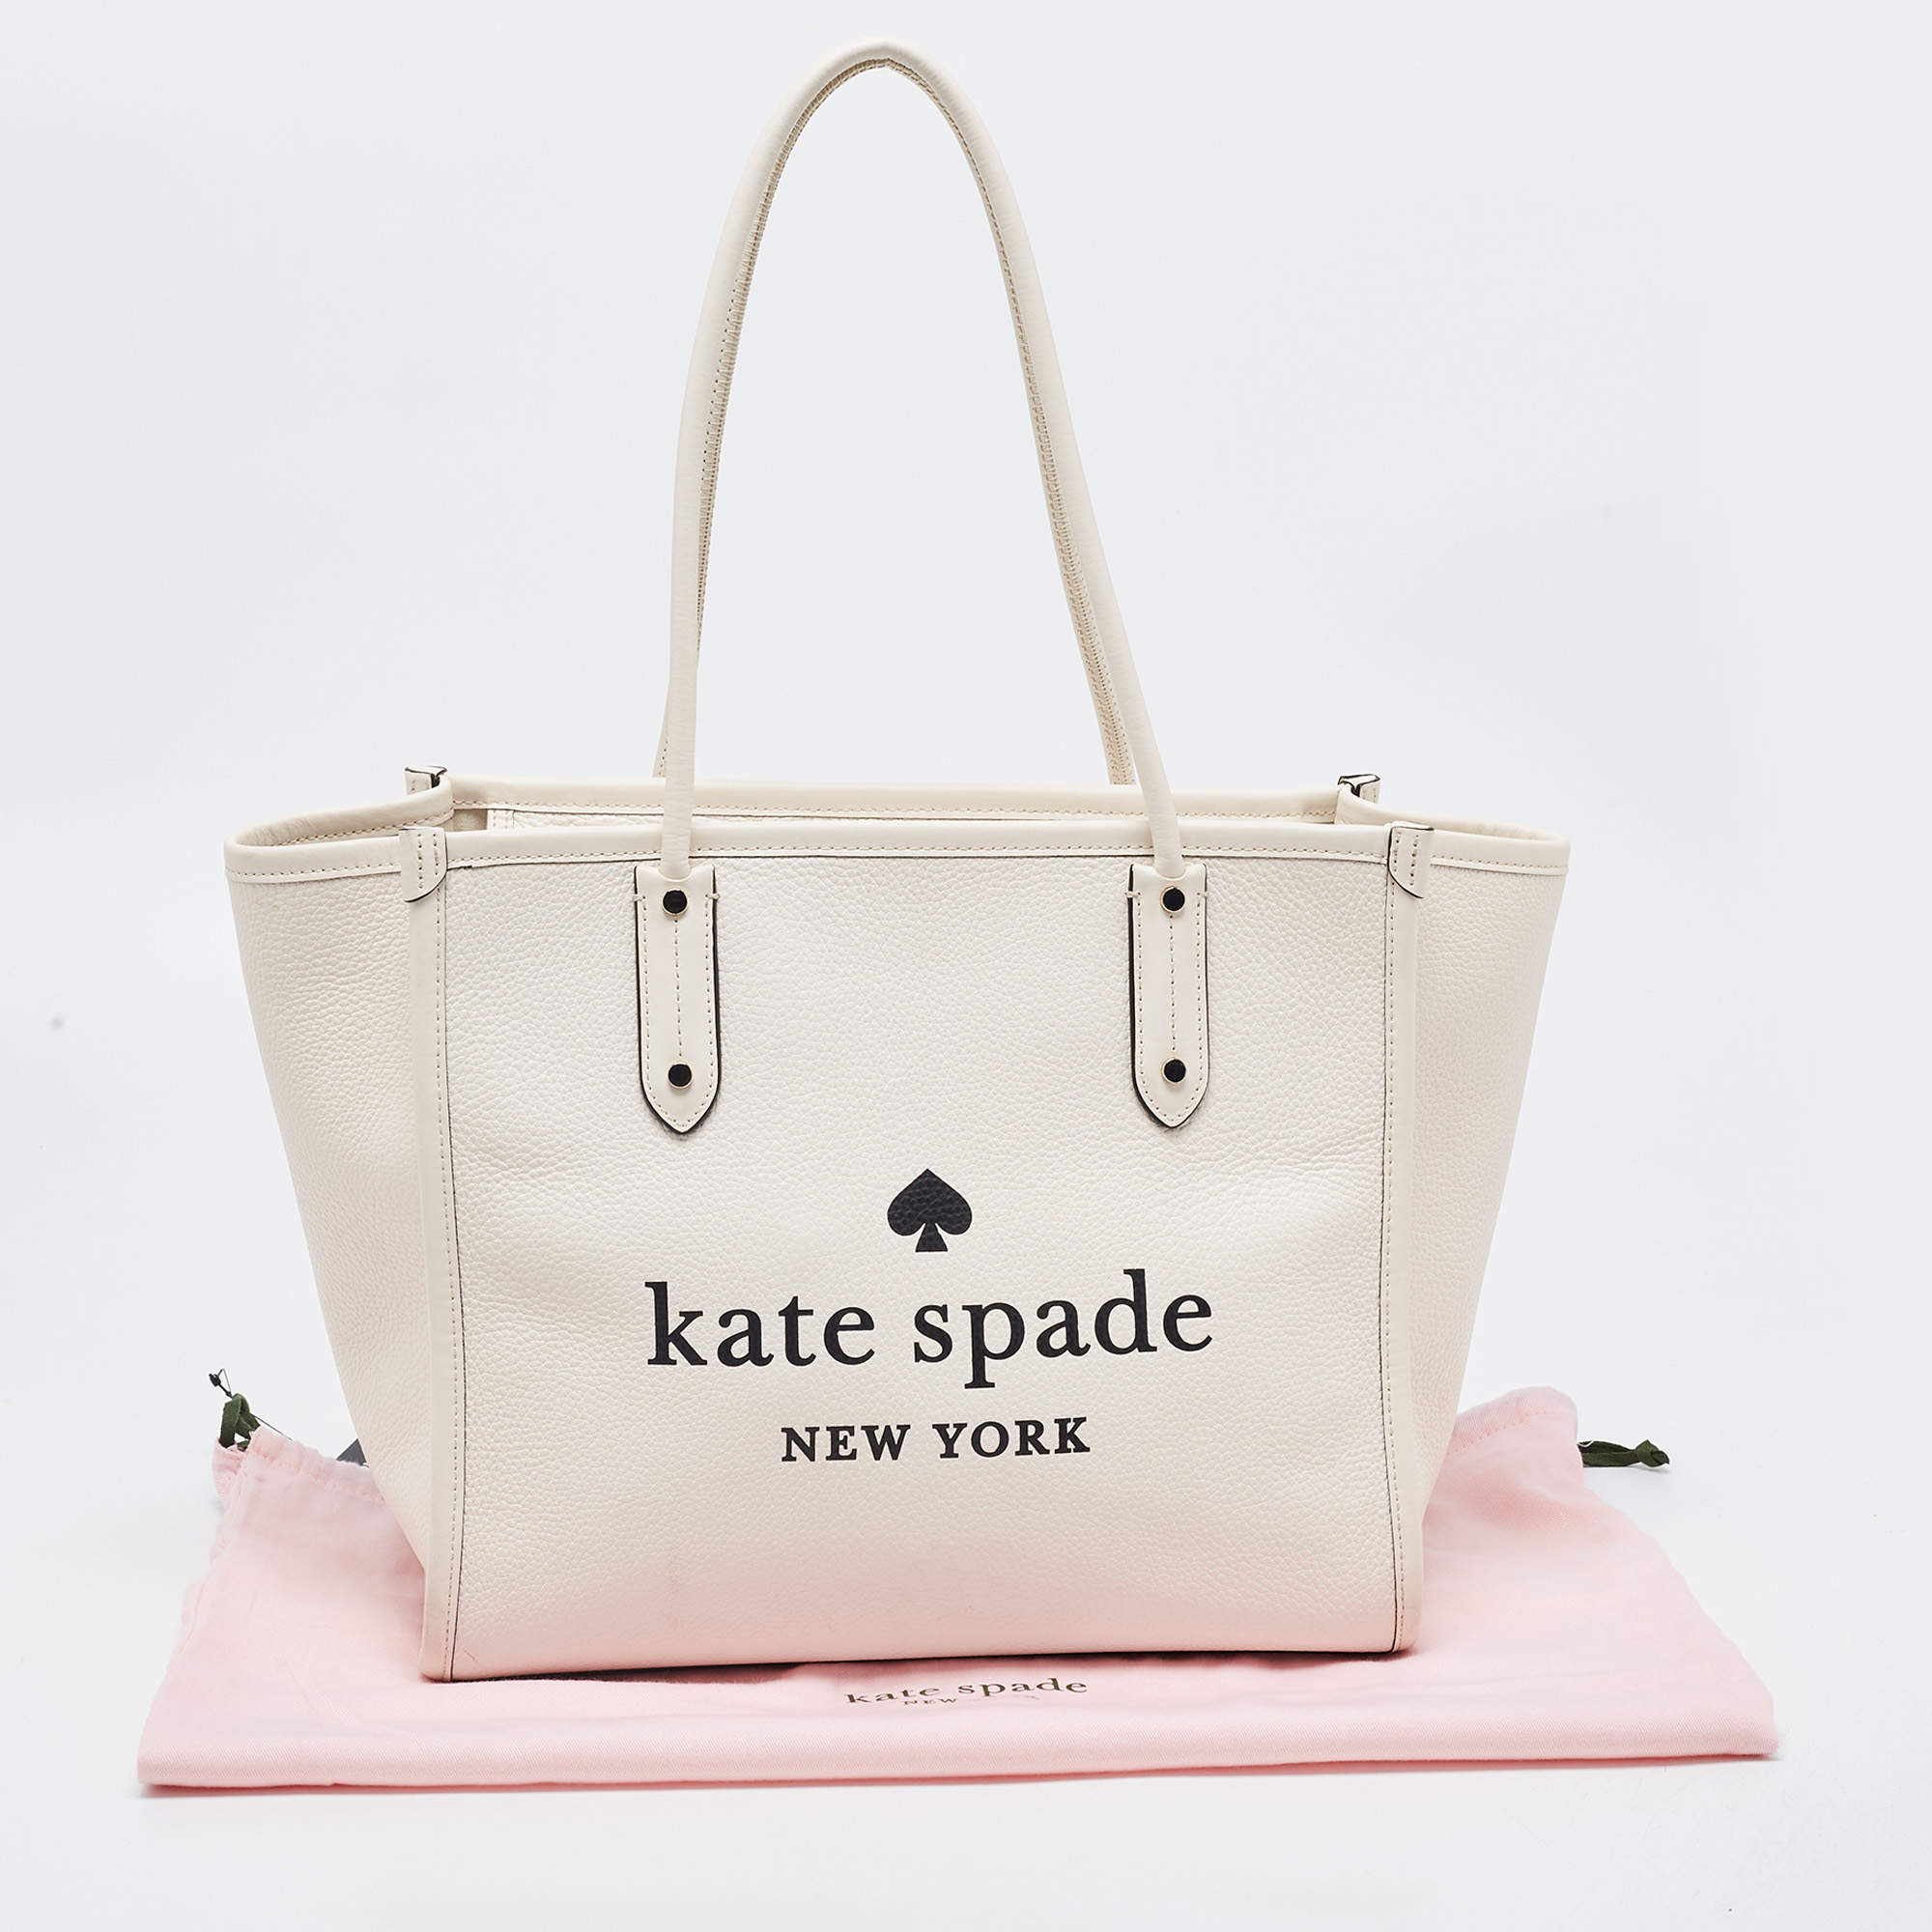 Kate Spade hand bag